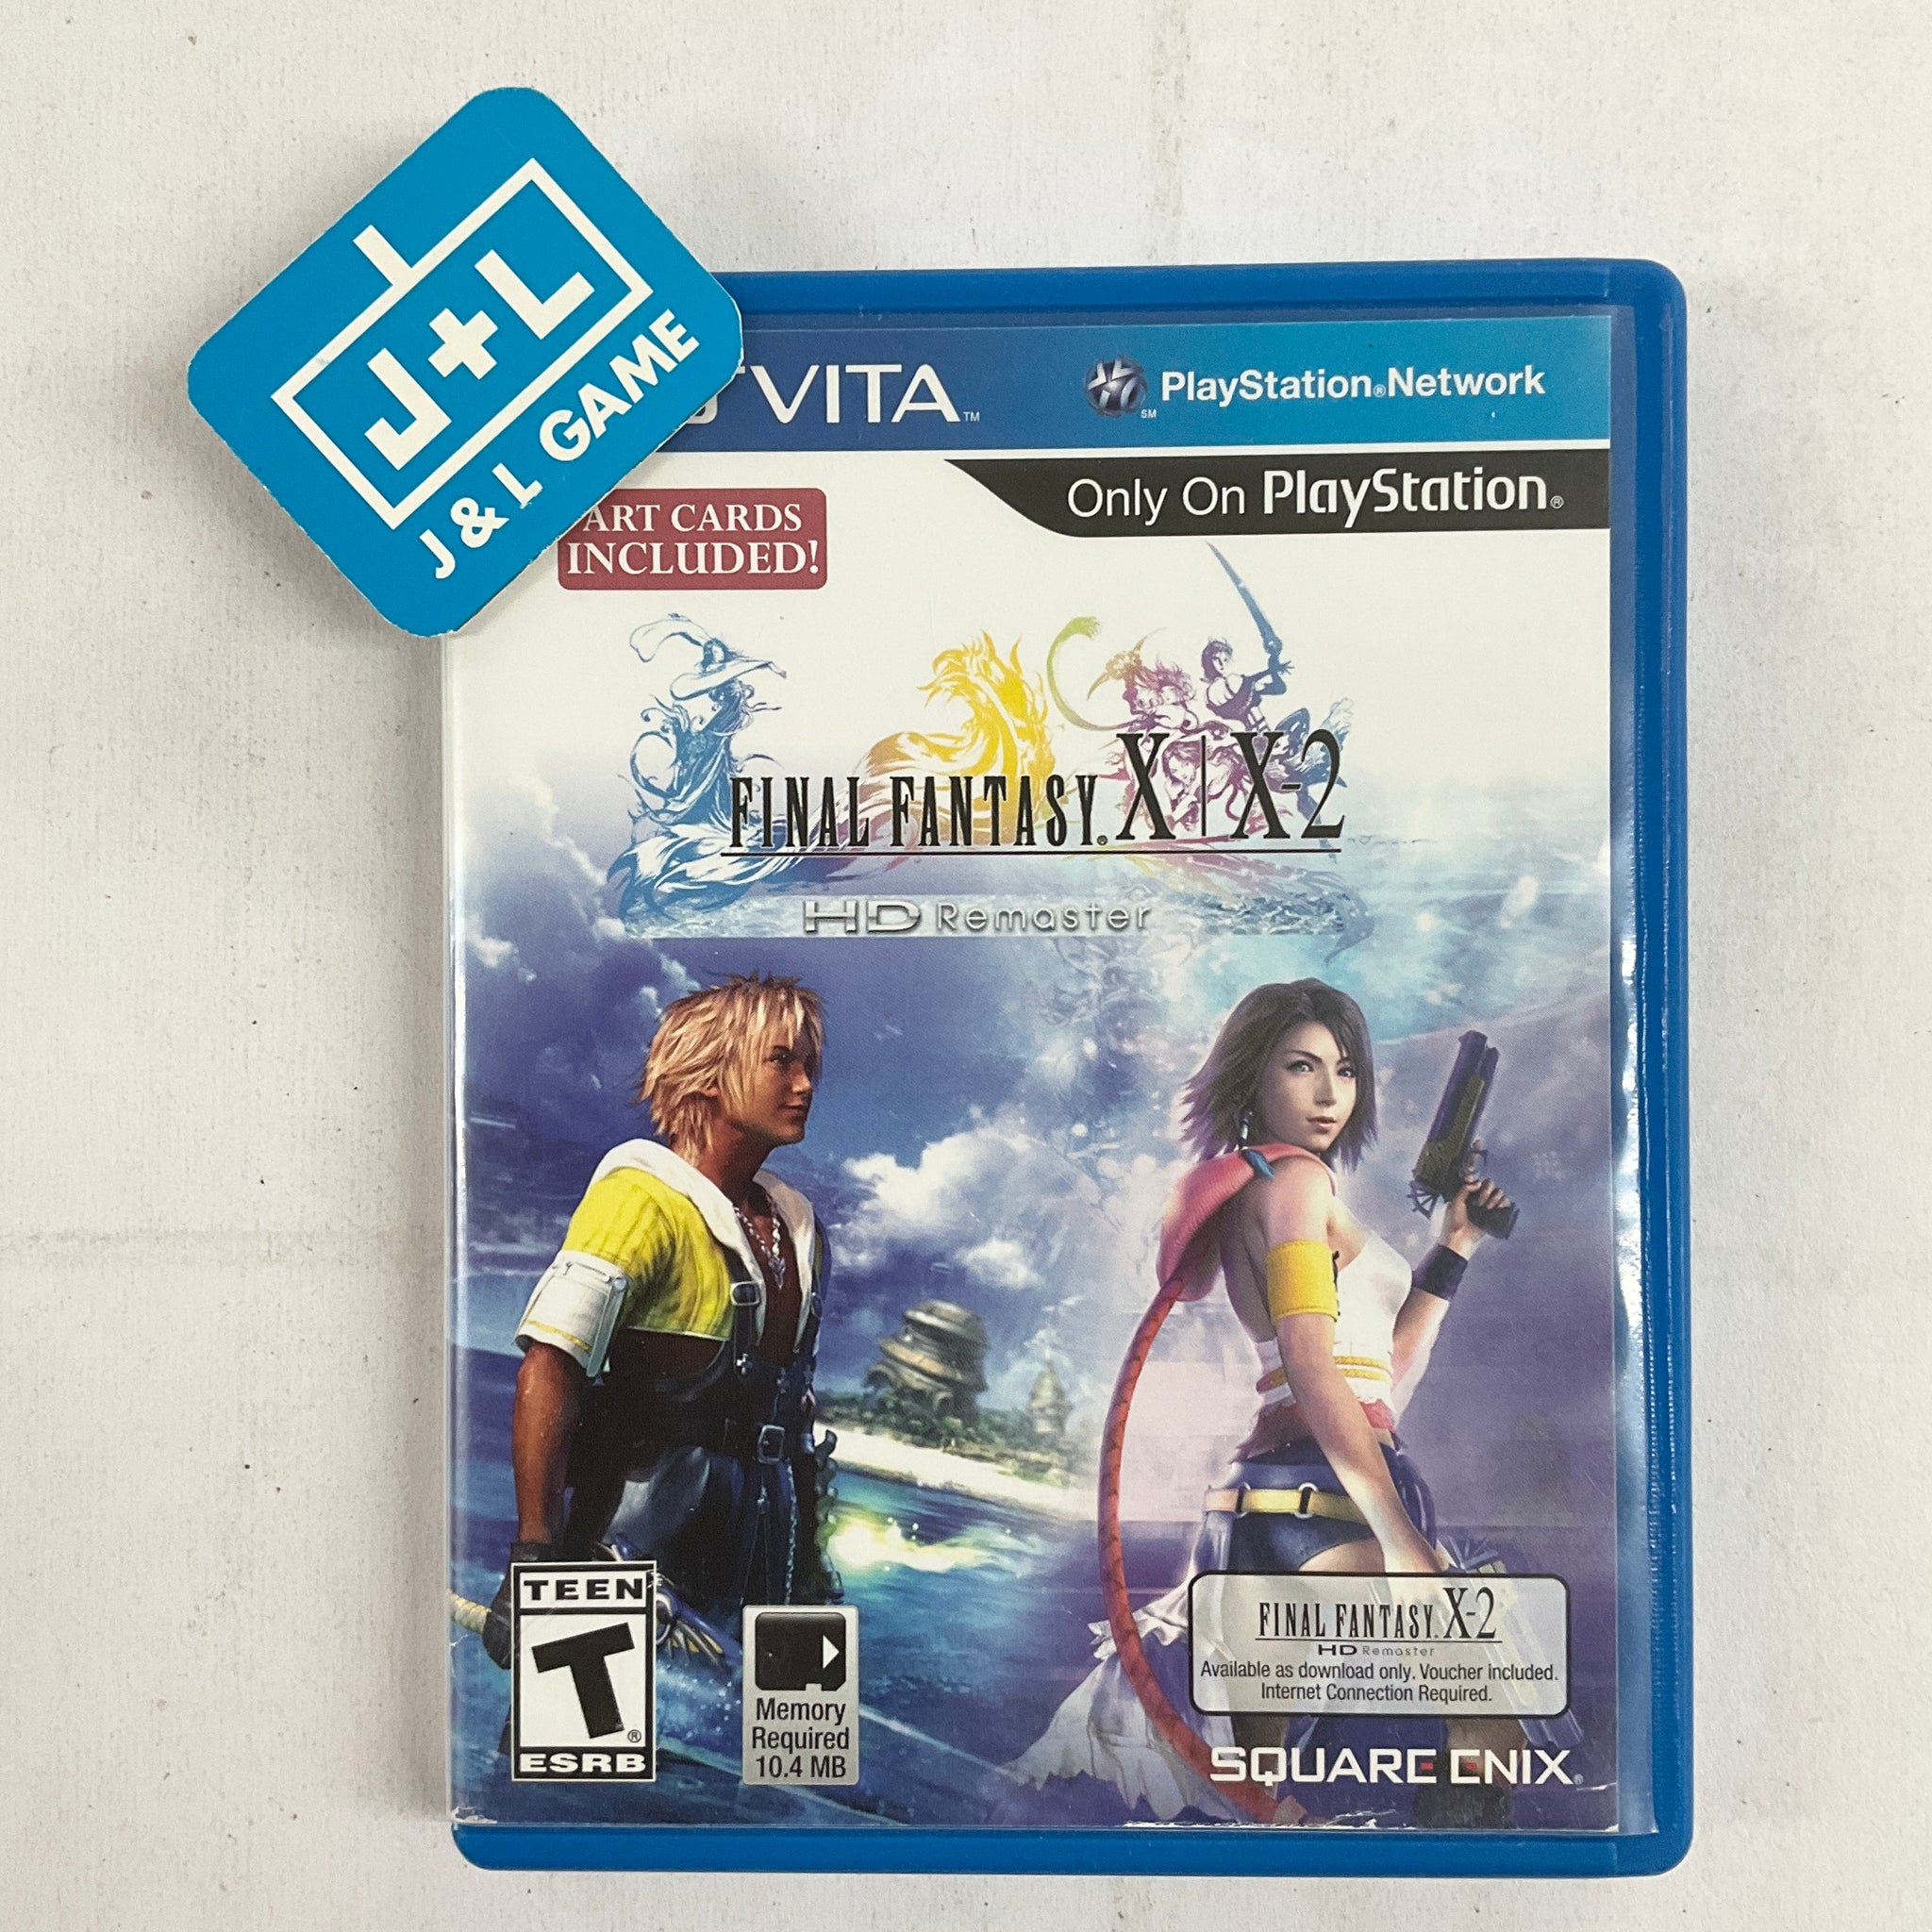 Final Fantasy X / X-2 HD Remaster Limited Edition [PlayStation 3] 